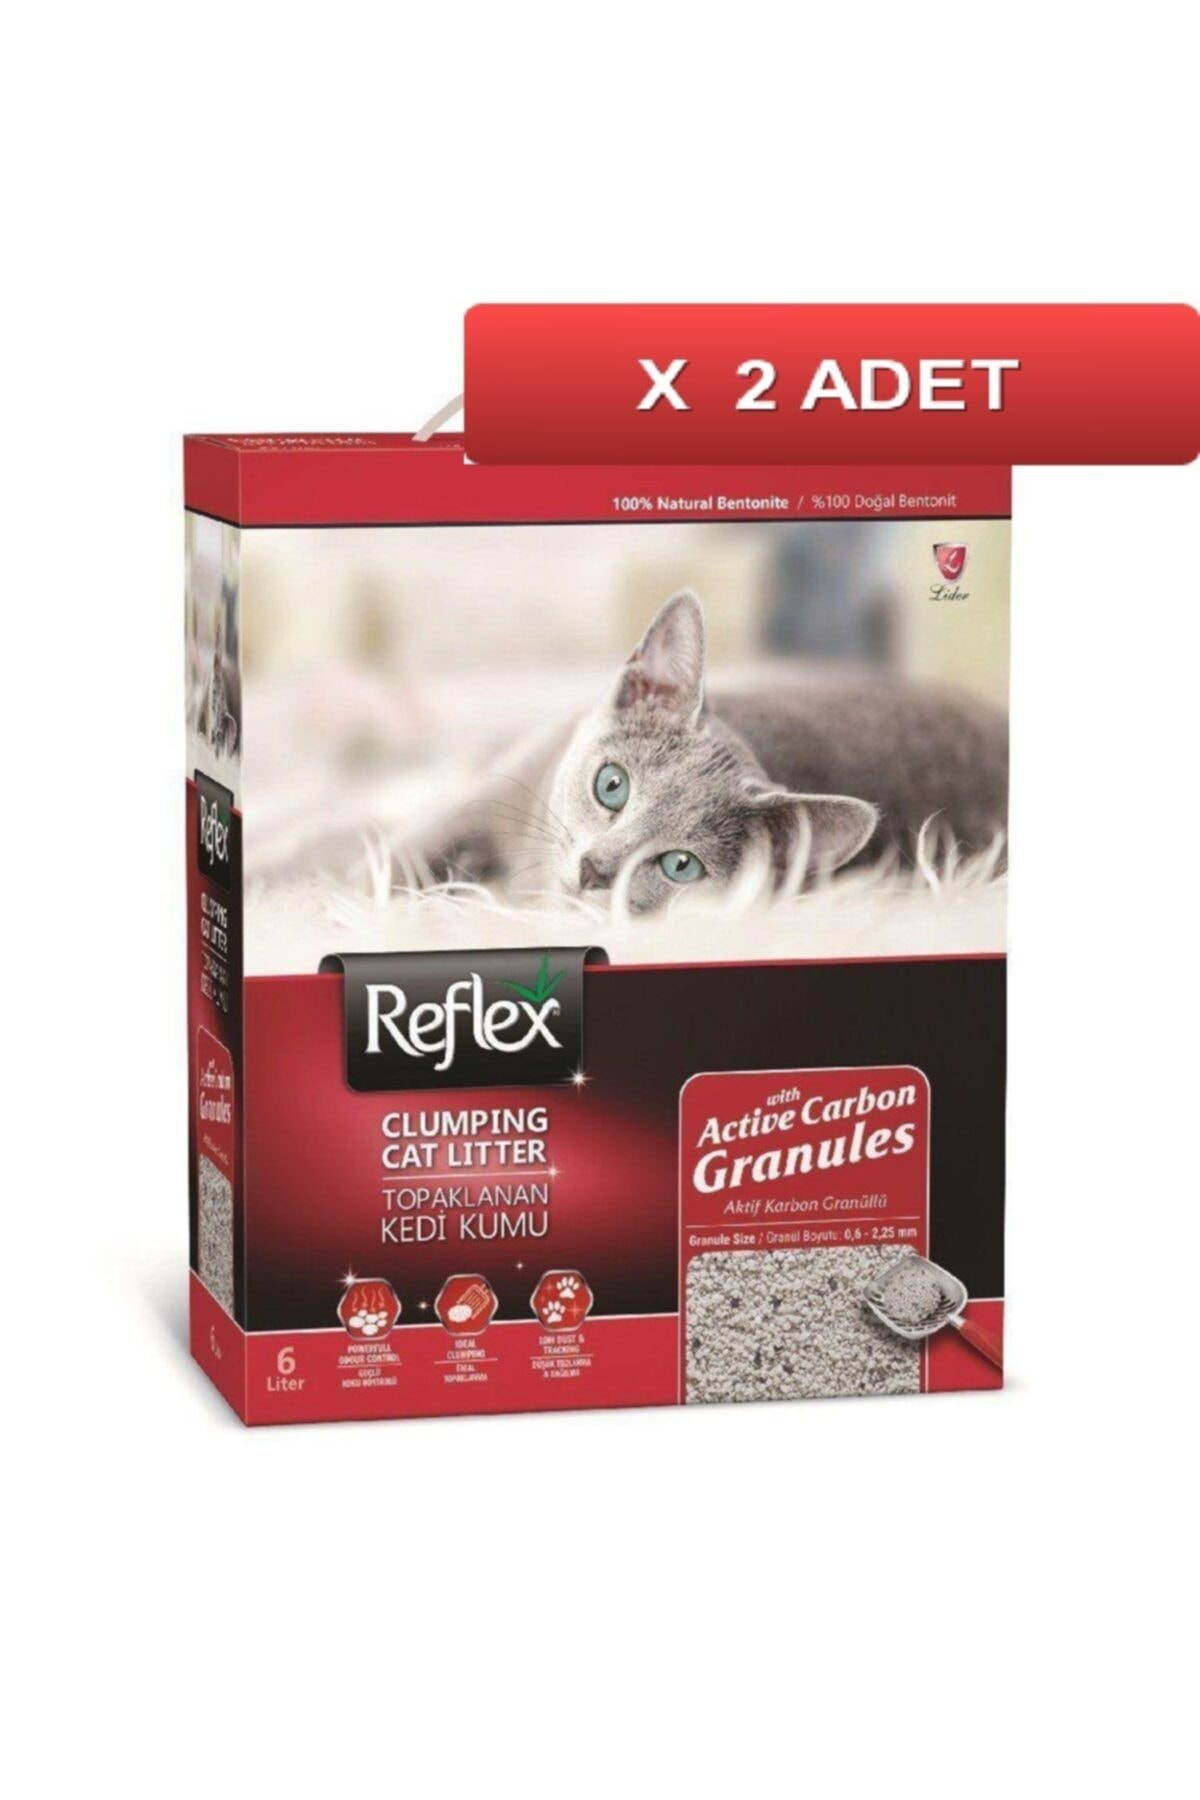 Reflex Granül Aktif Karbonlu Süper Hızlı Topaklanan Kedi Kumu 6lt Kırmızı (2 Adet)